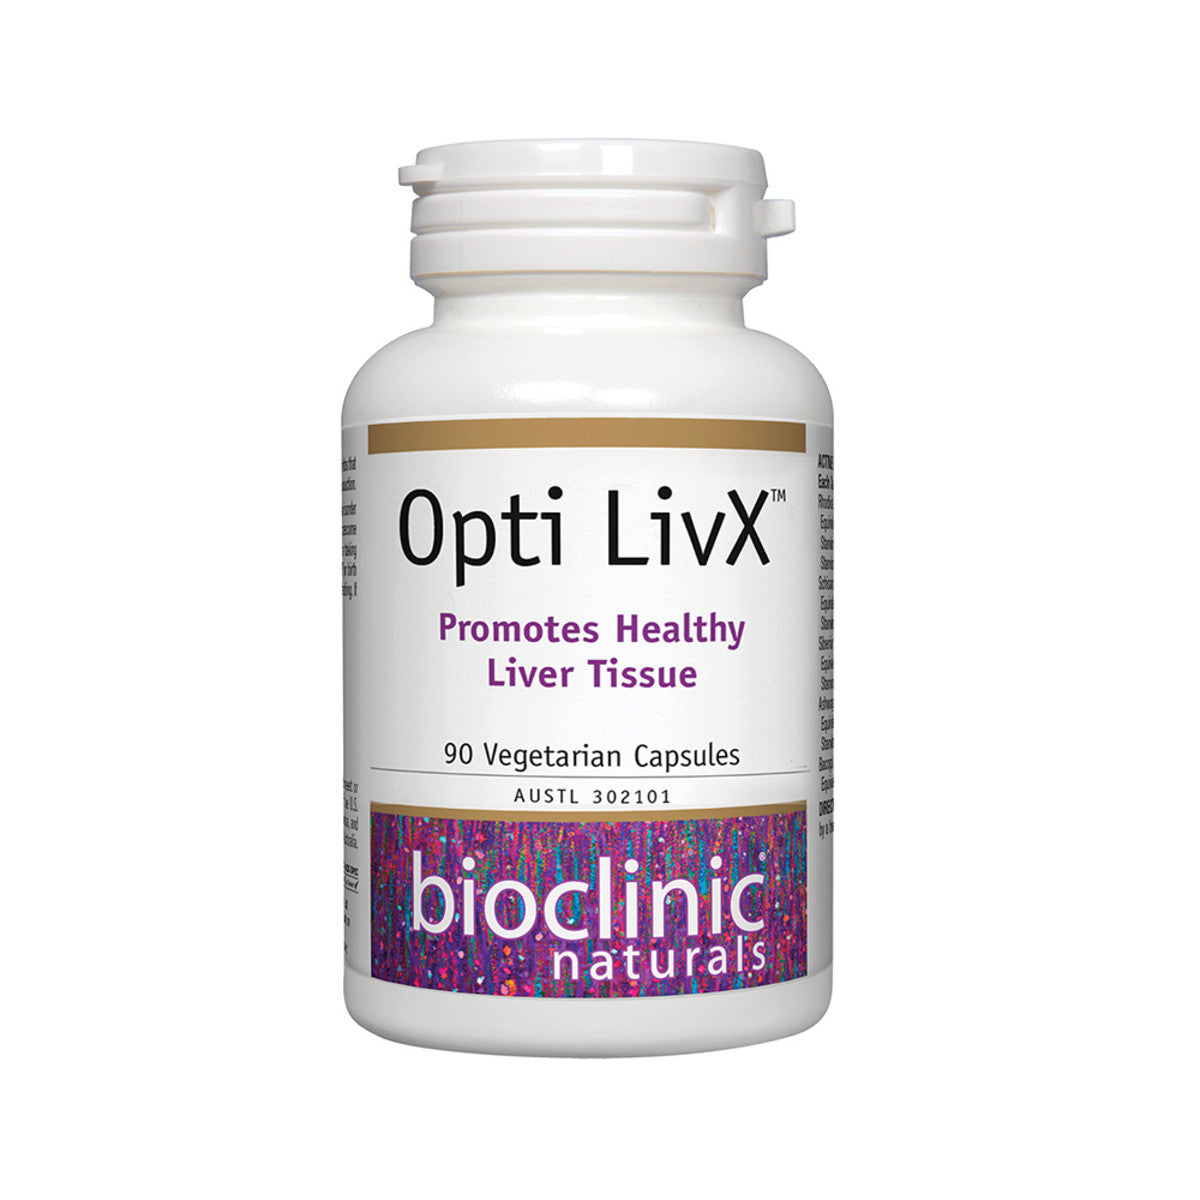 Bioclinic Naturals - Opti LivX